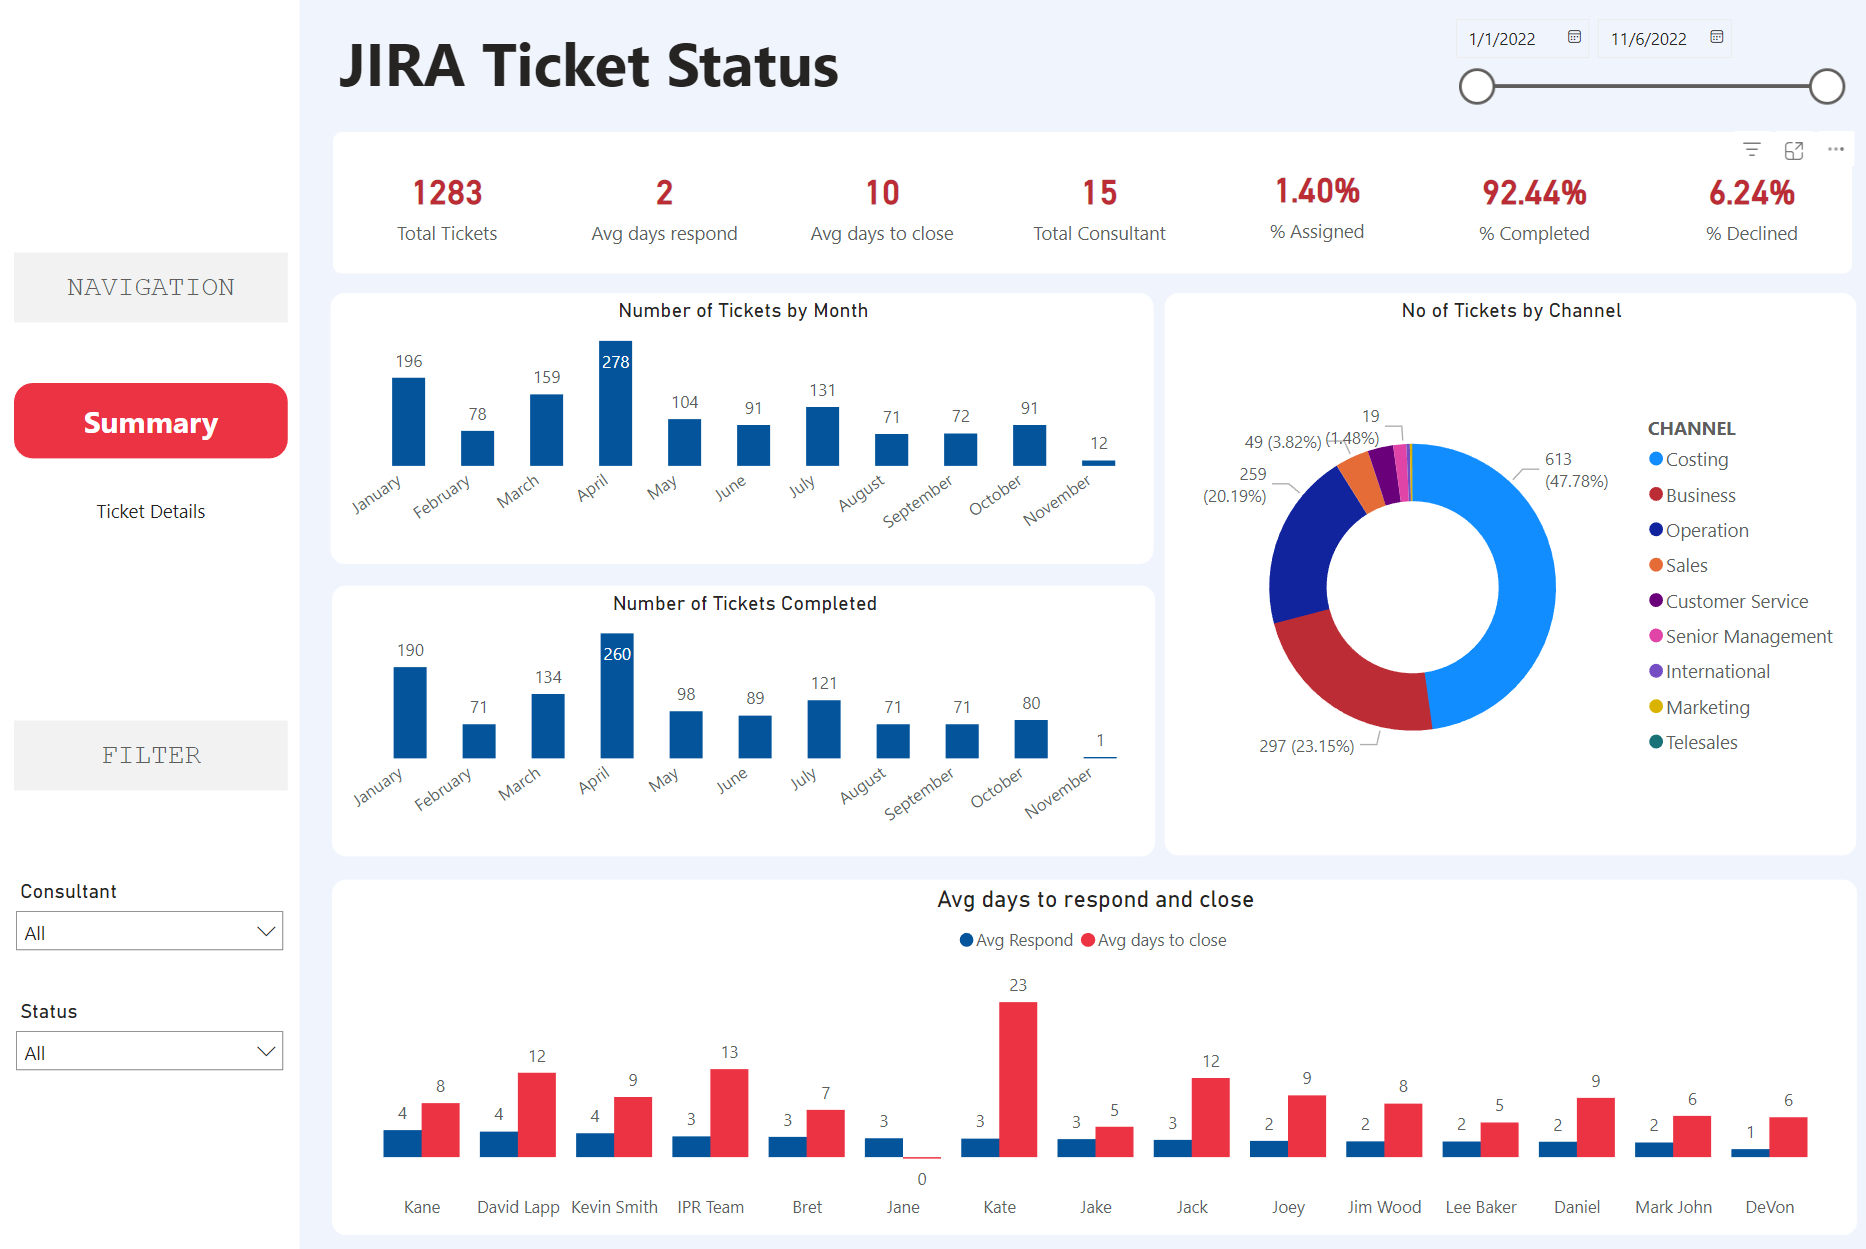 JIRA Ticket Status